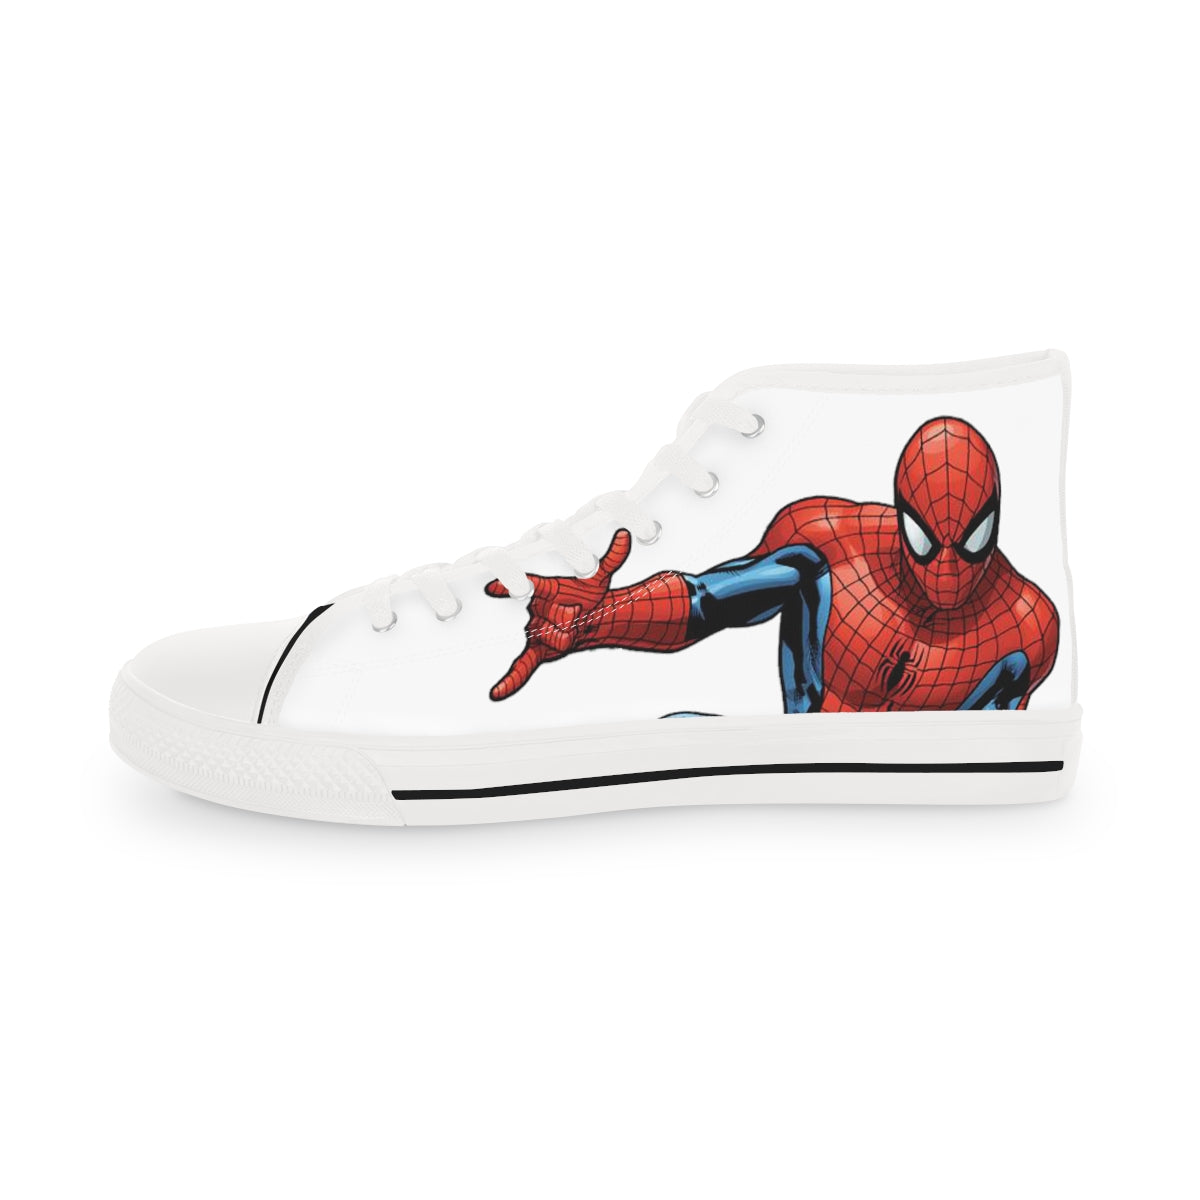 Men's High Top Sneakers, Spiderman Theme